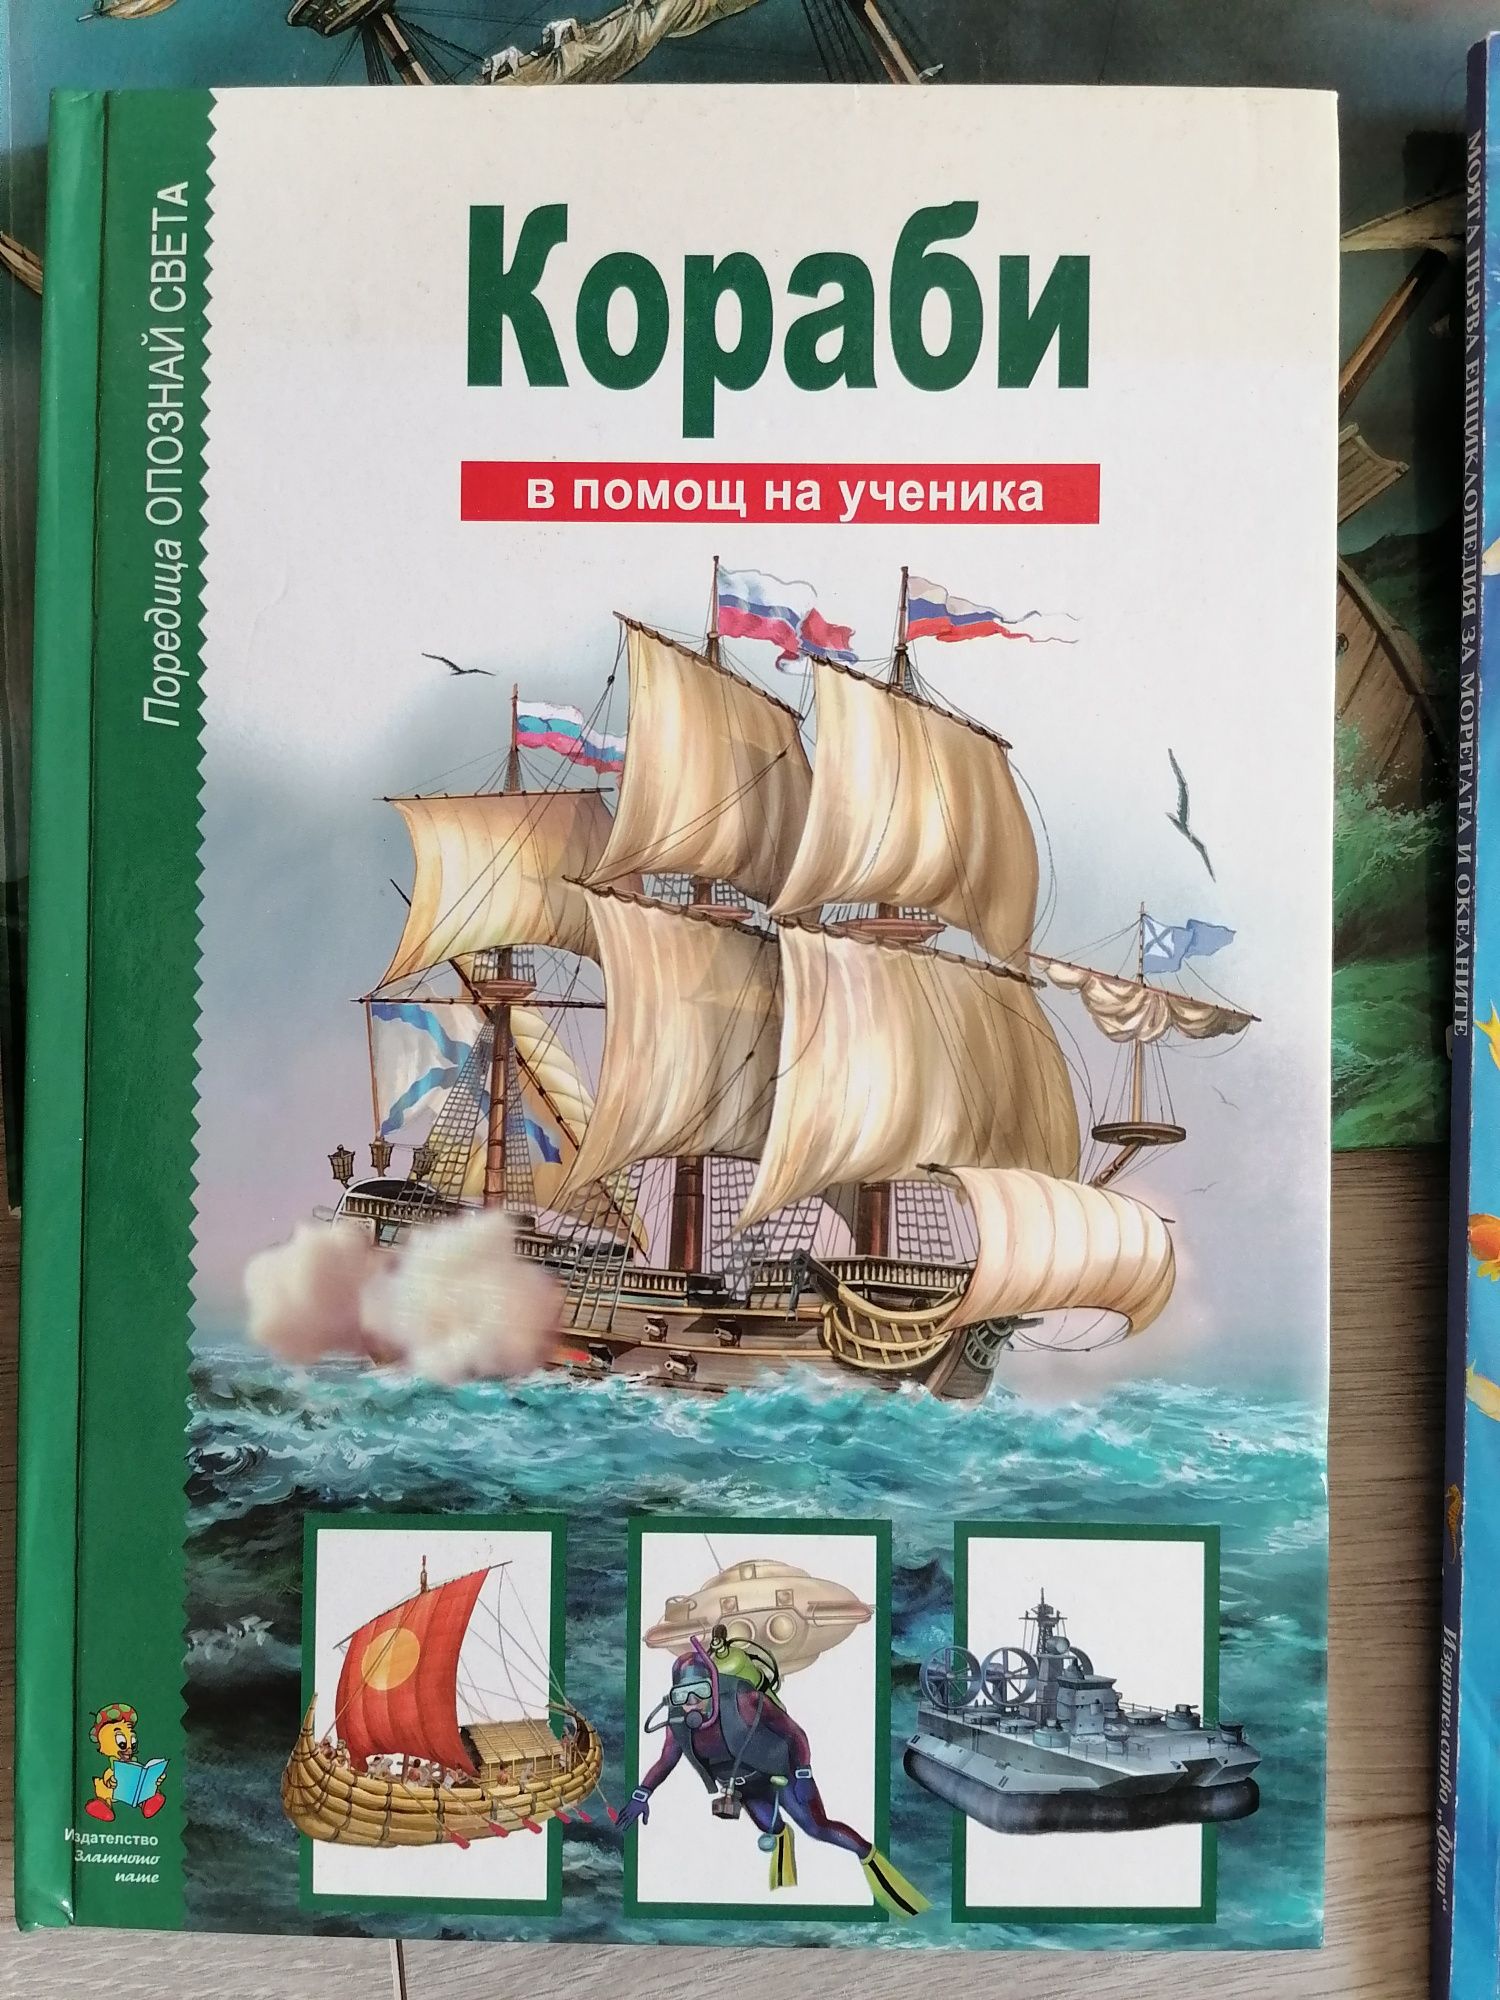 Книги за кораби и океани